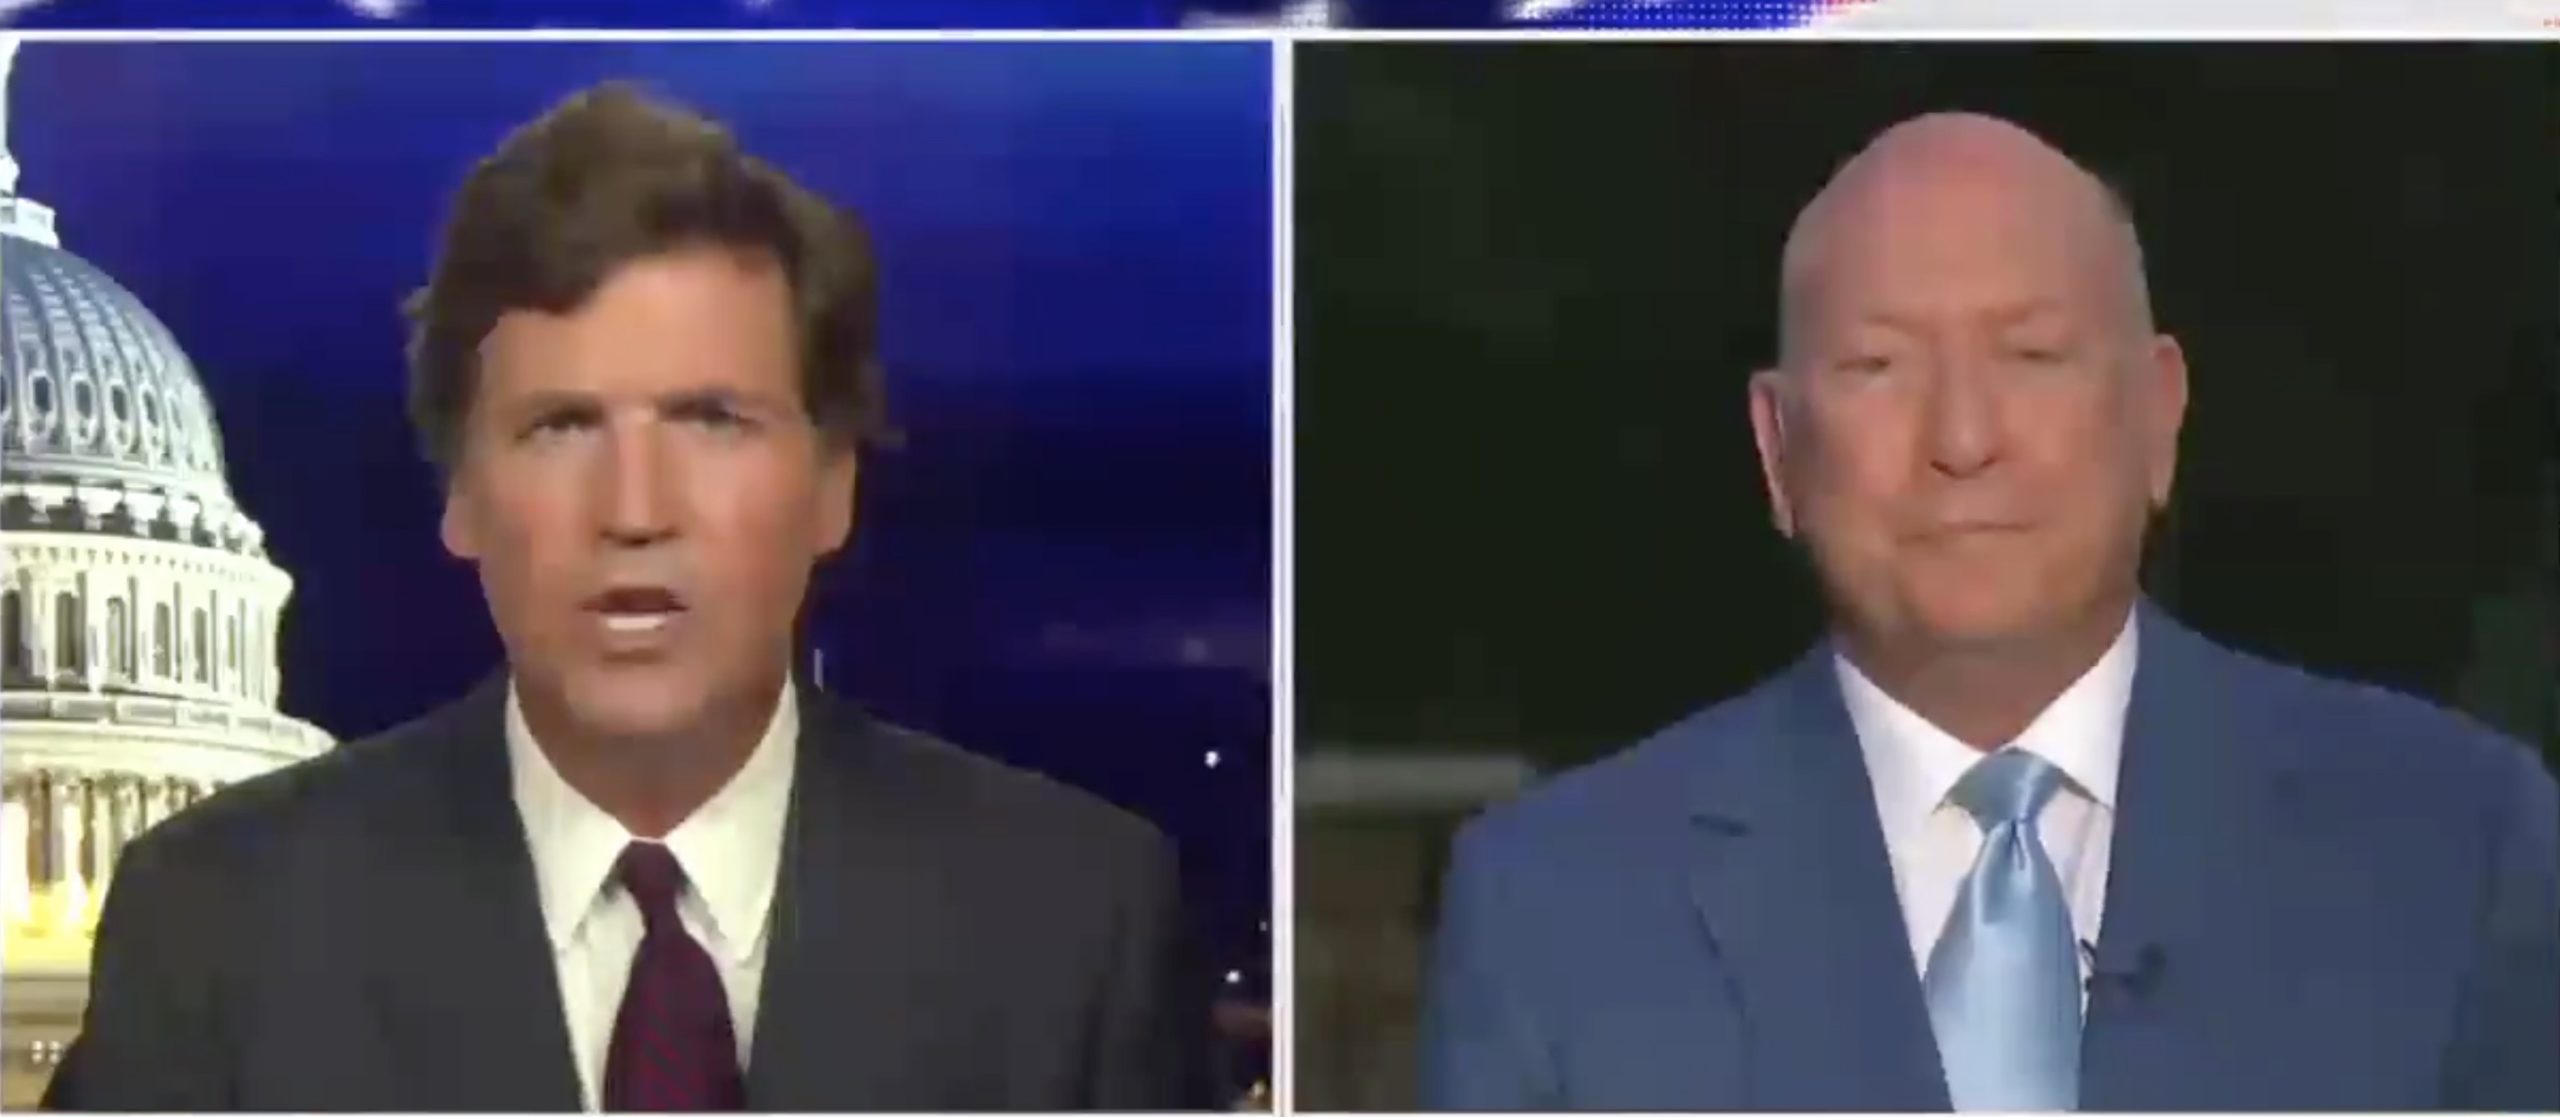 Stephen Miller Tells Fox News That He's Suing Joe Biden Over Illegal Immigration